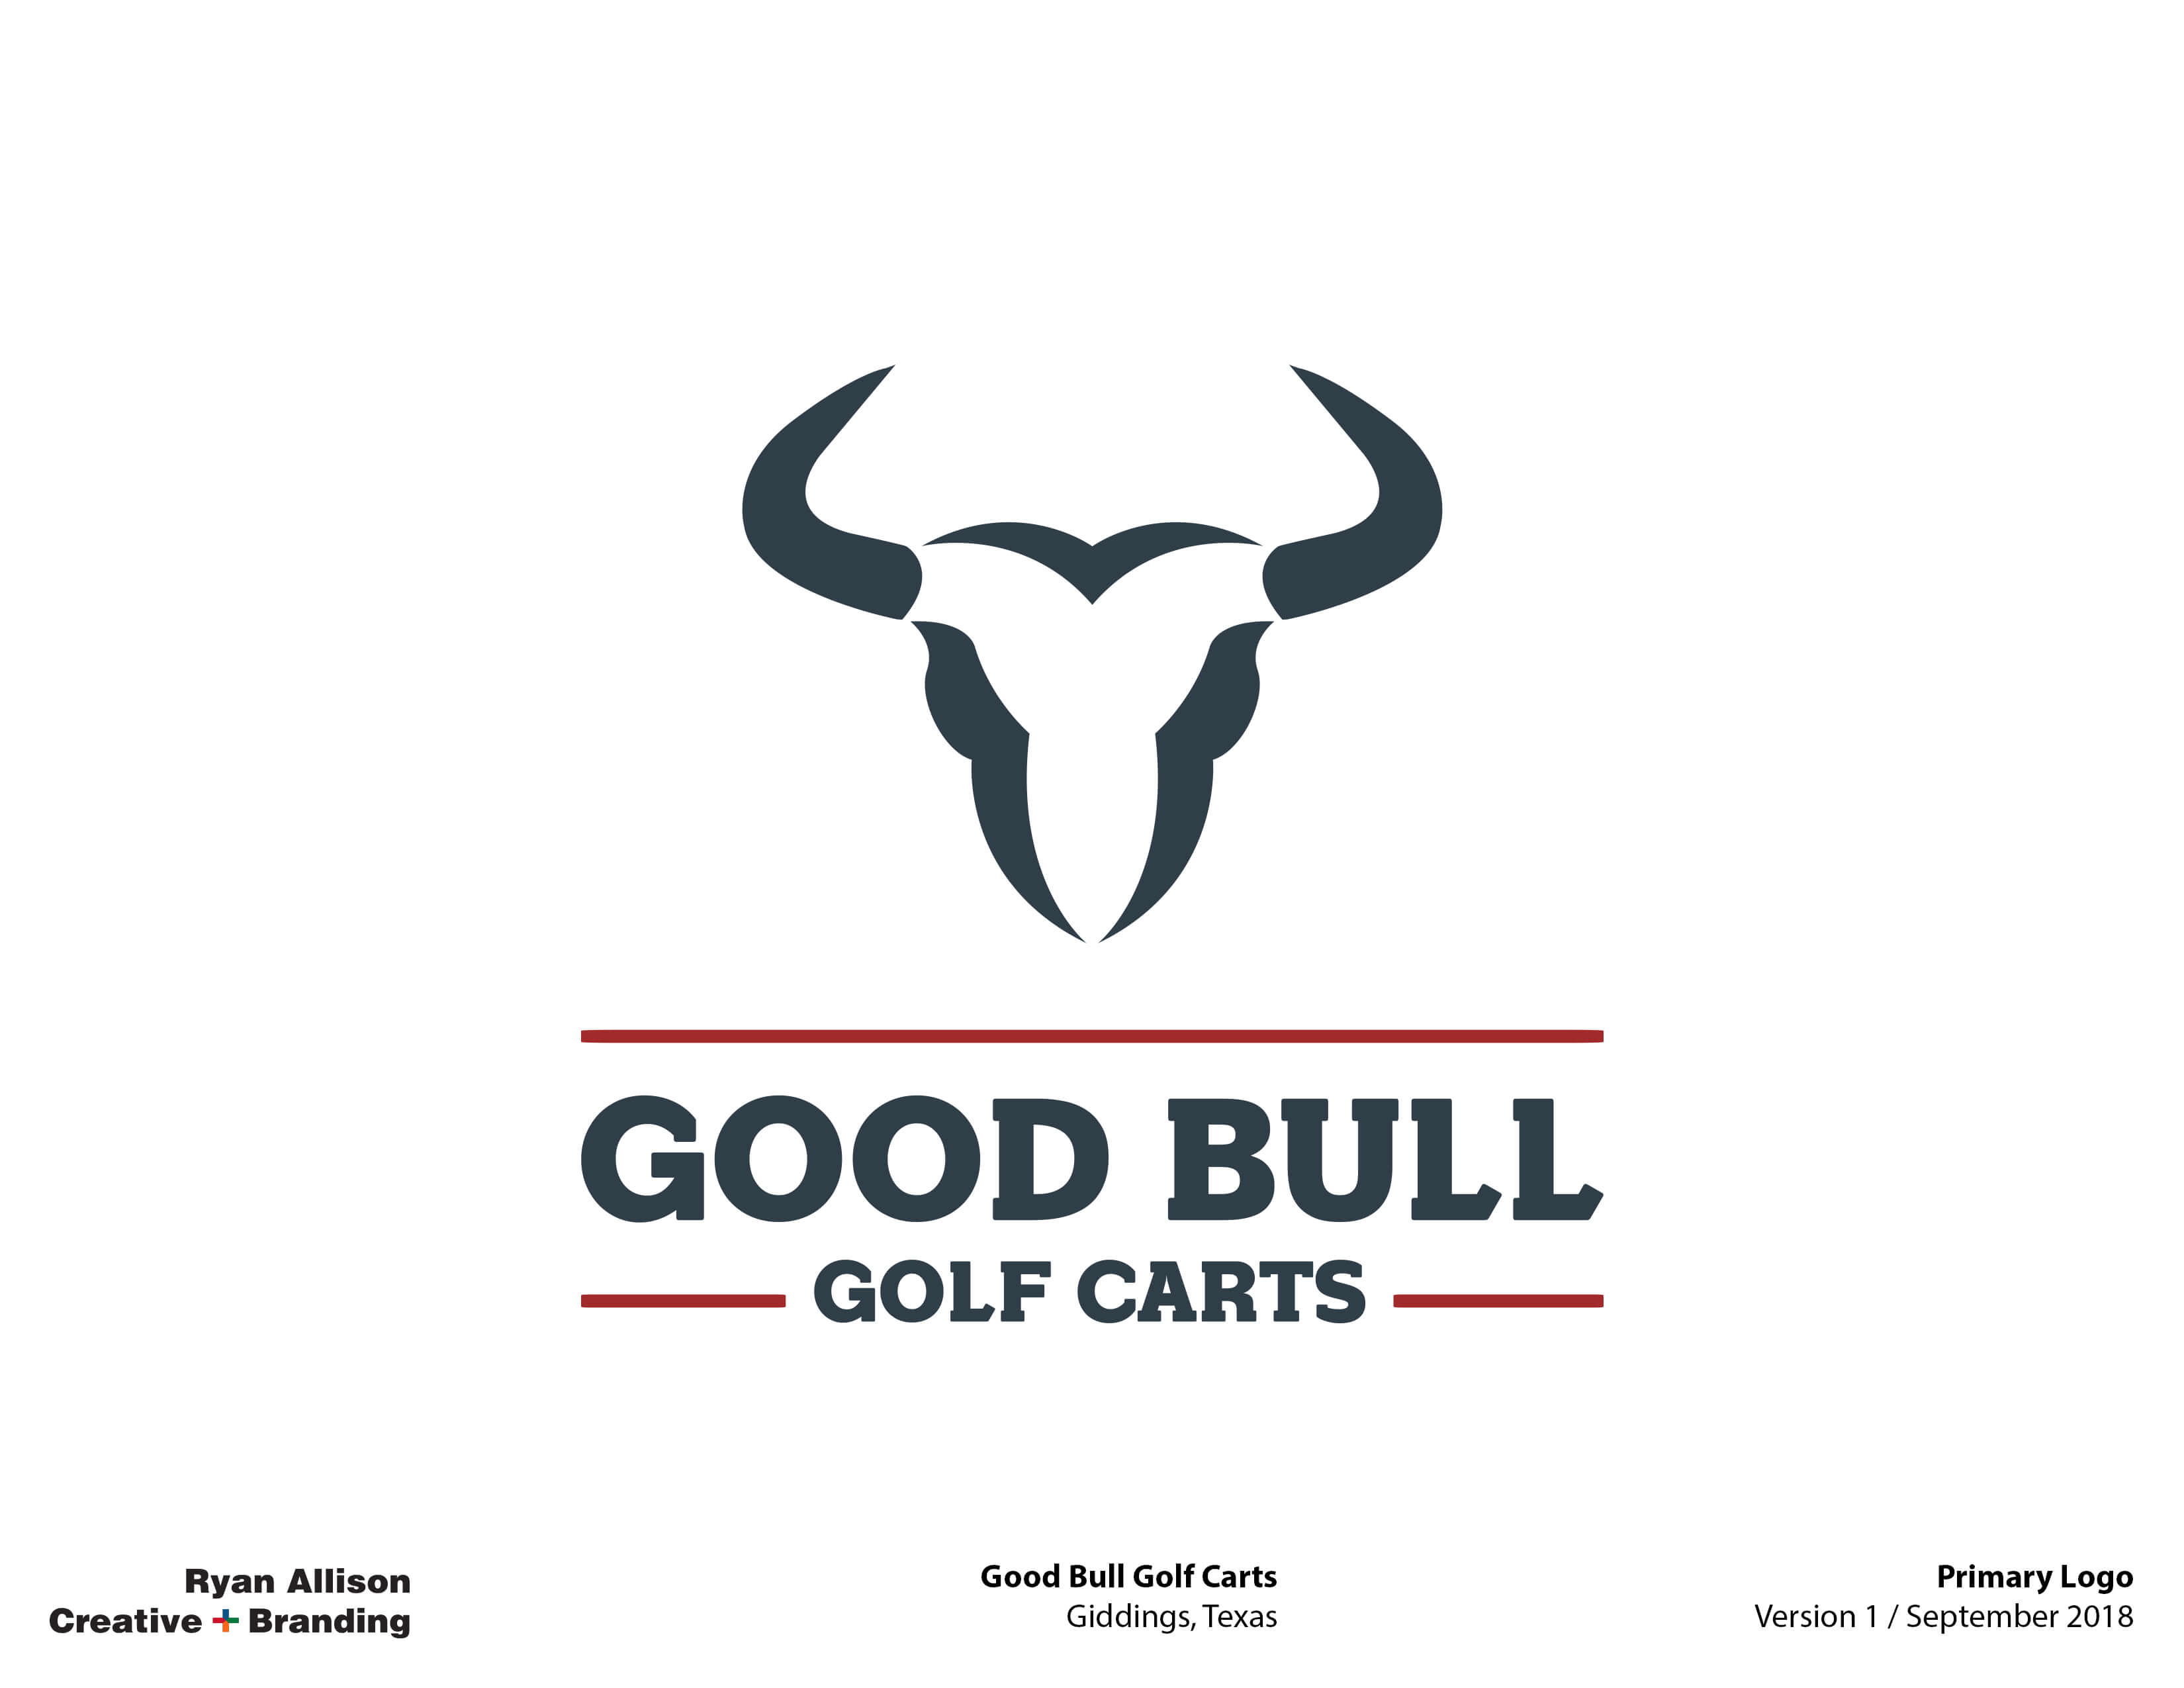 Good Bull Golf Carts Primary Logo - Logo - Ryan Allison Creative + Branding